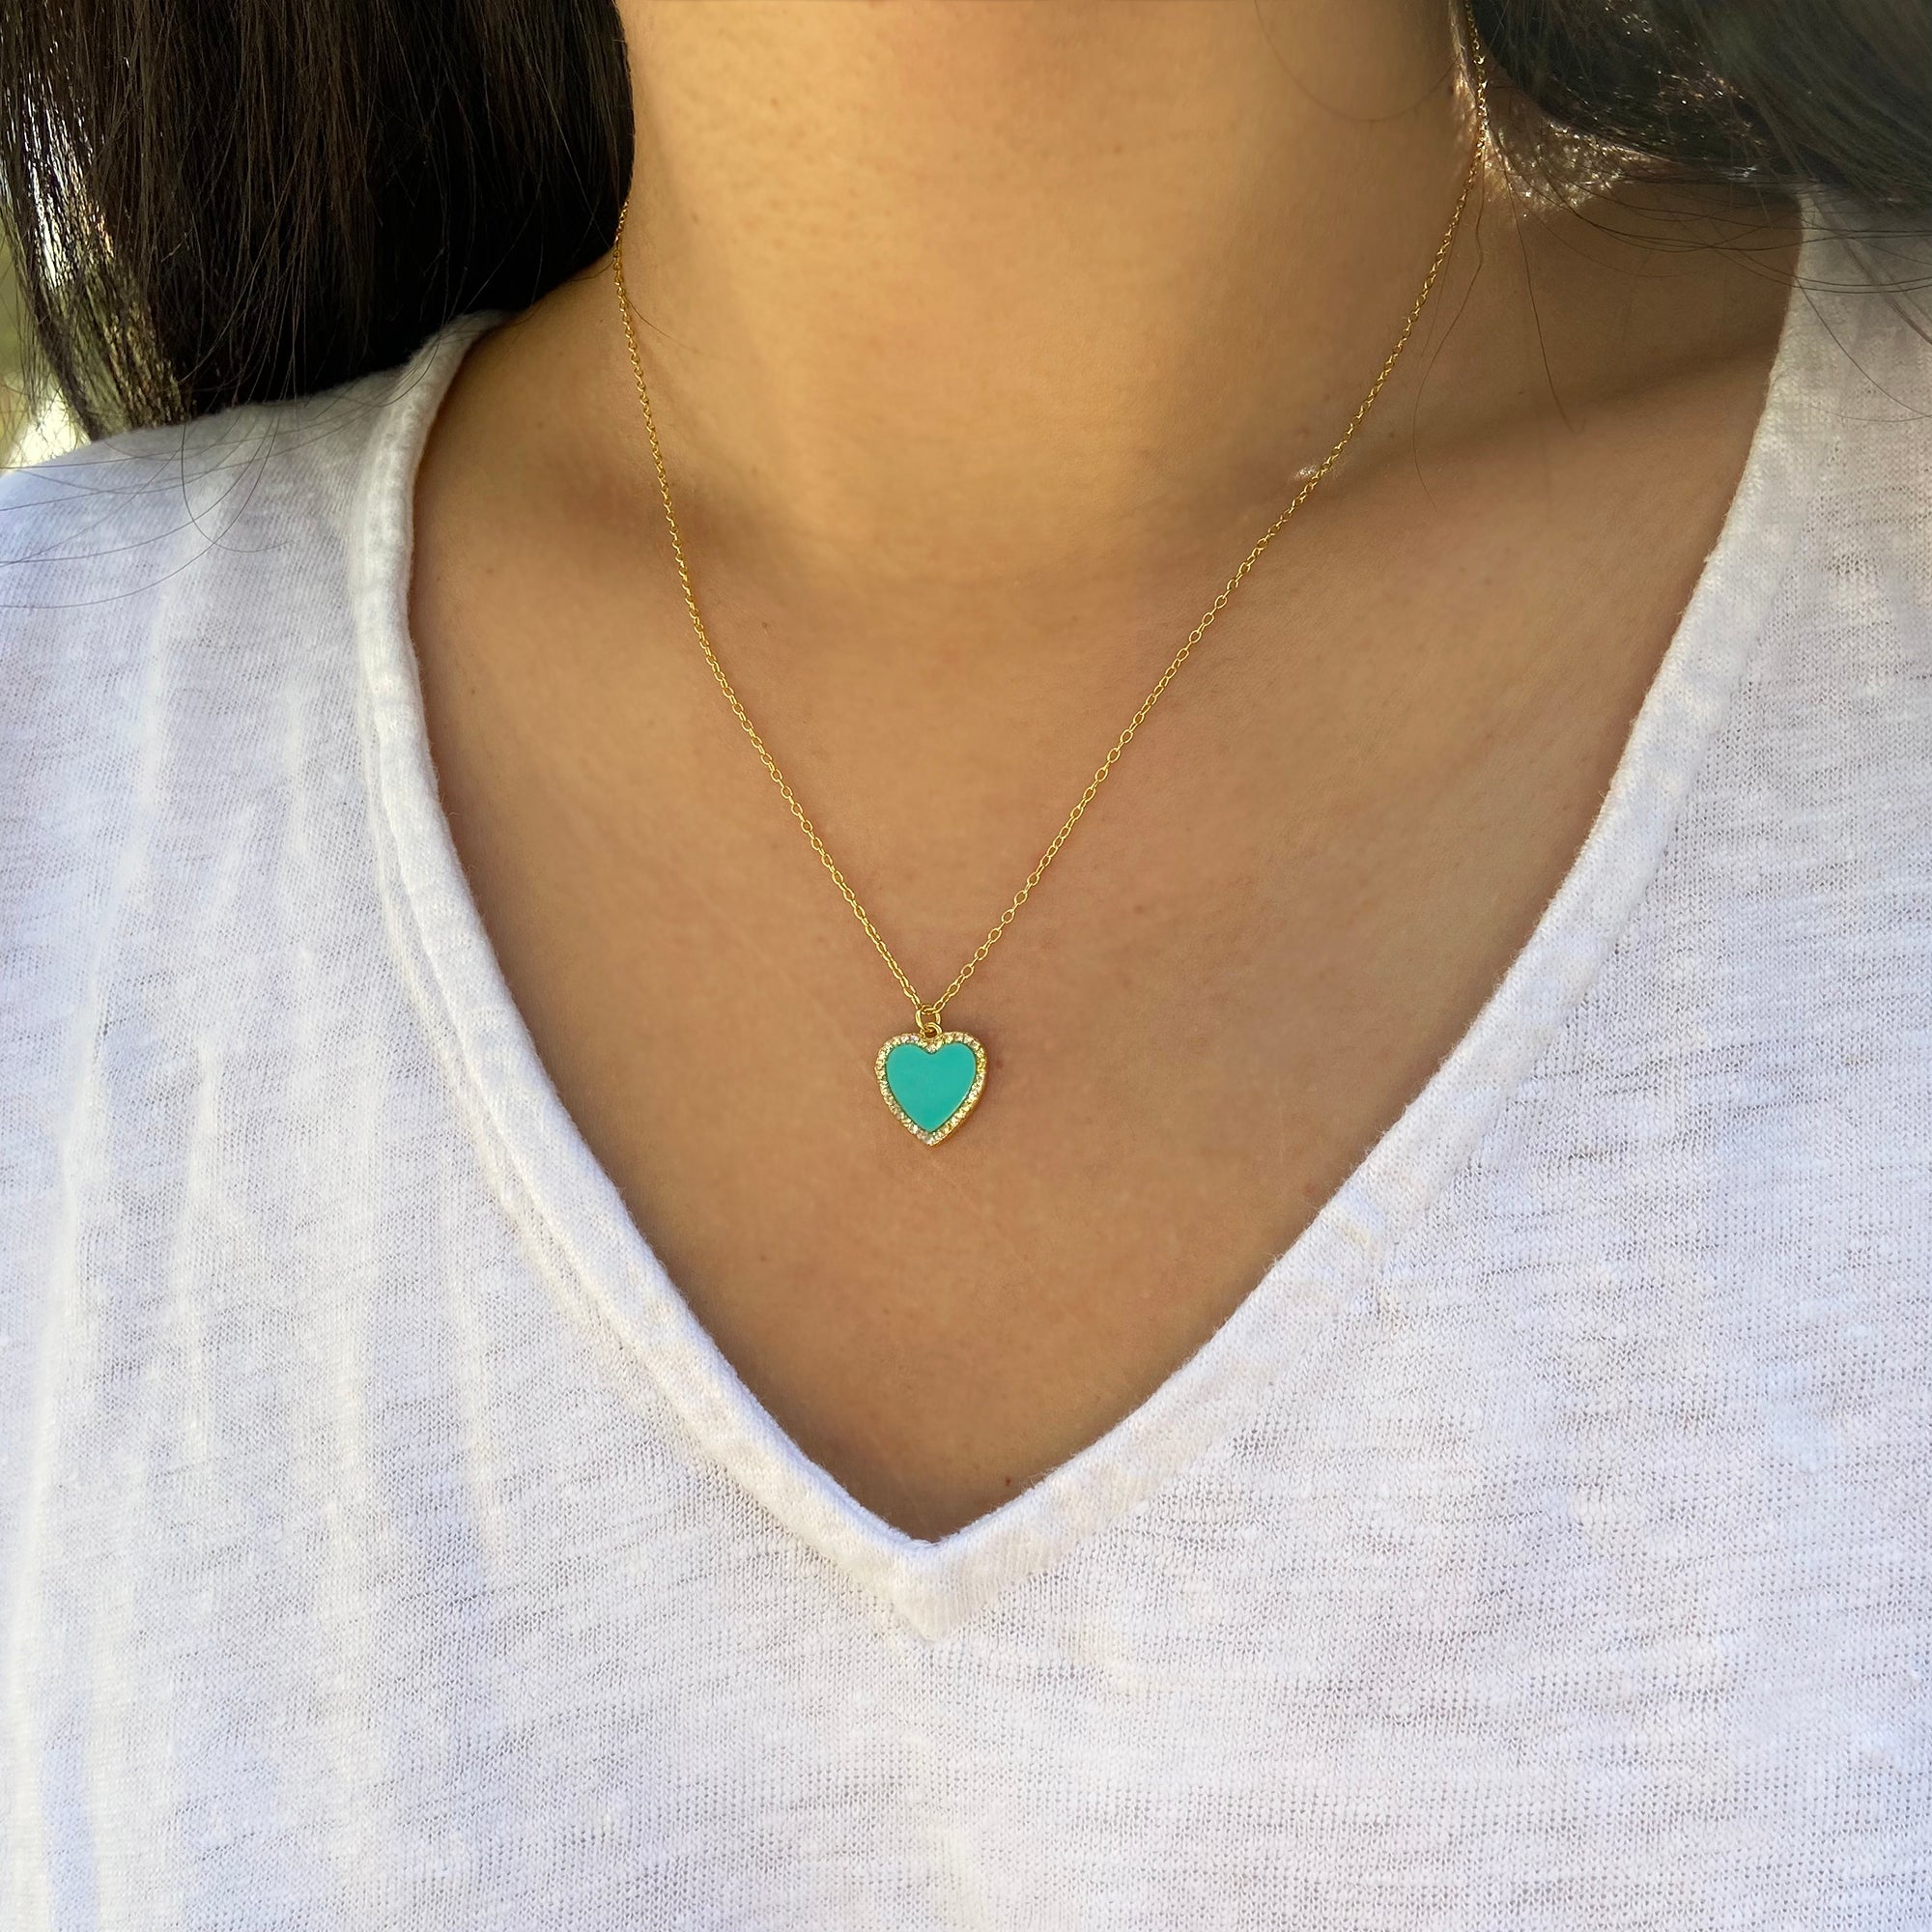 Rainbow Heart Necklace – Elisabeth Bell